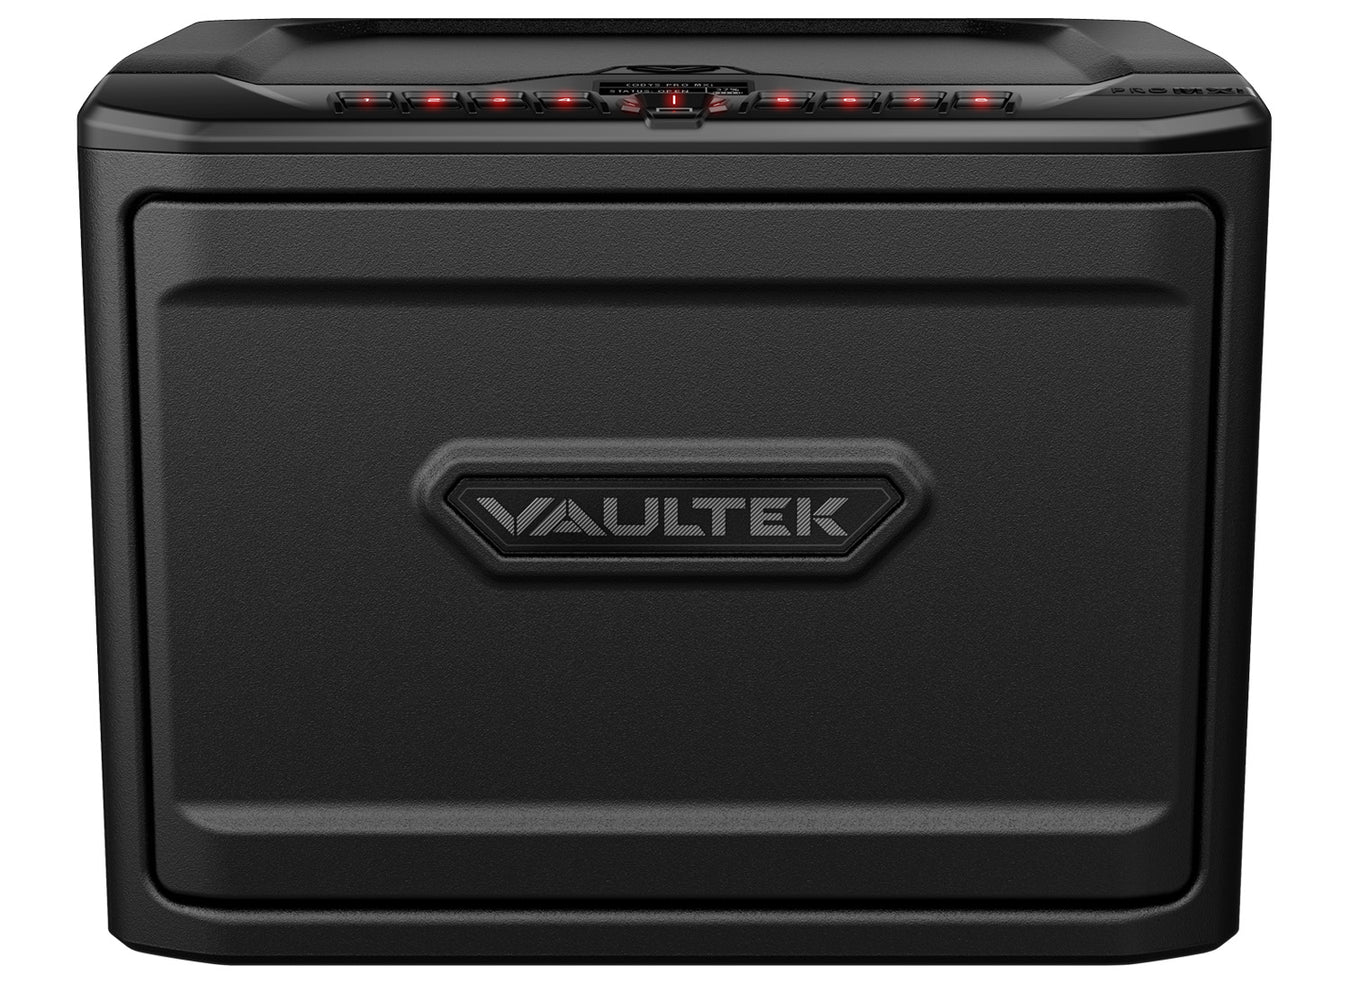 Vaultek - MX Wifi Series (Biometric and Non-Biometric)